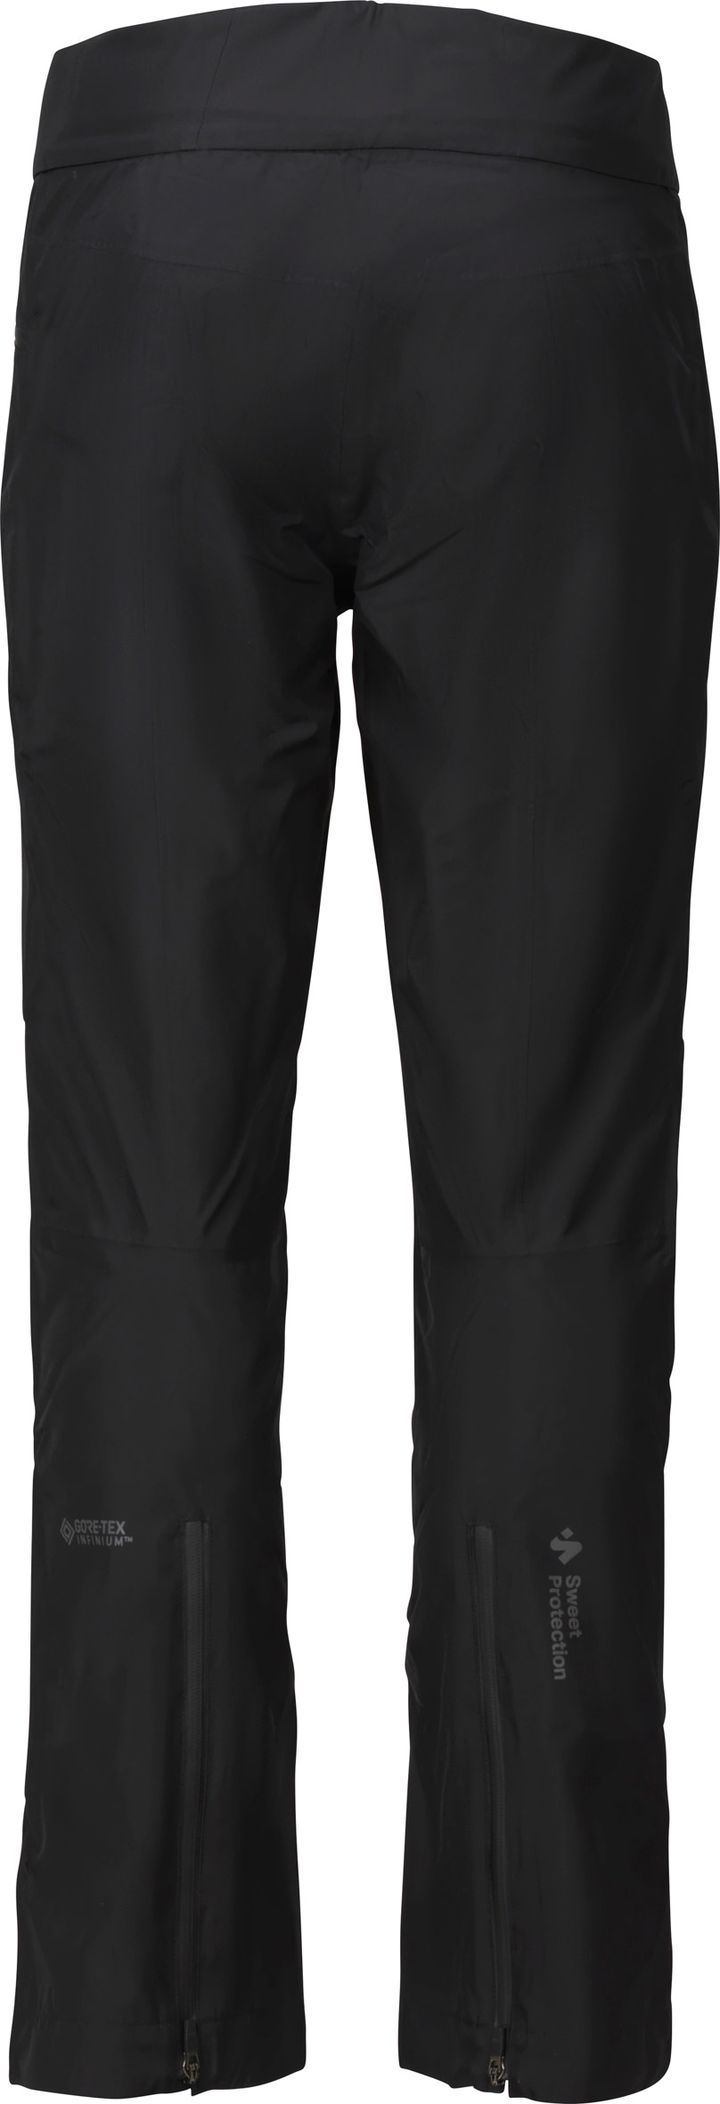 Women's Crusader Gore-Tex Infinium Pants BLACK Sweet Protection